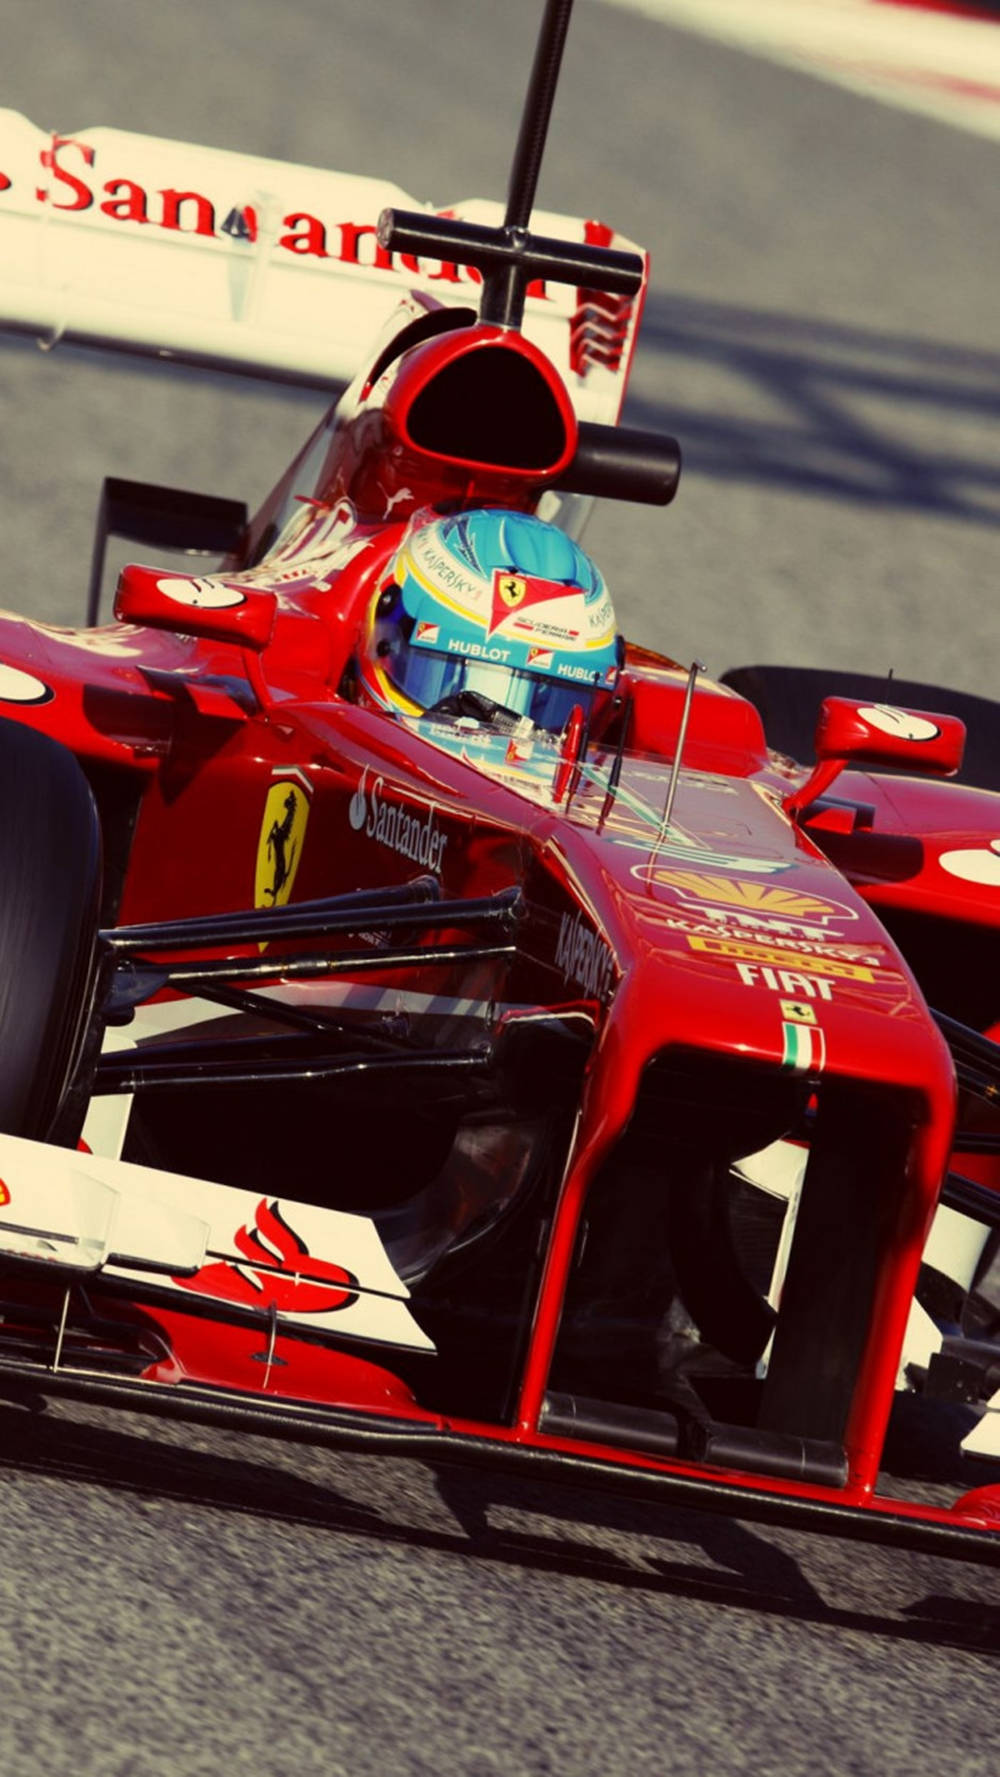 Red Racer Ferrari Iphone Wallpaper